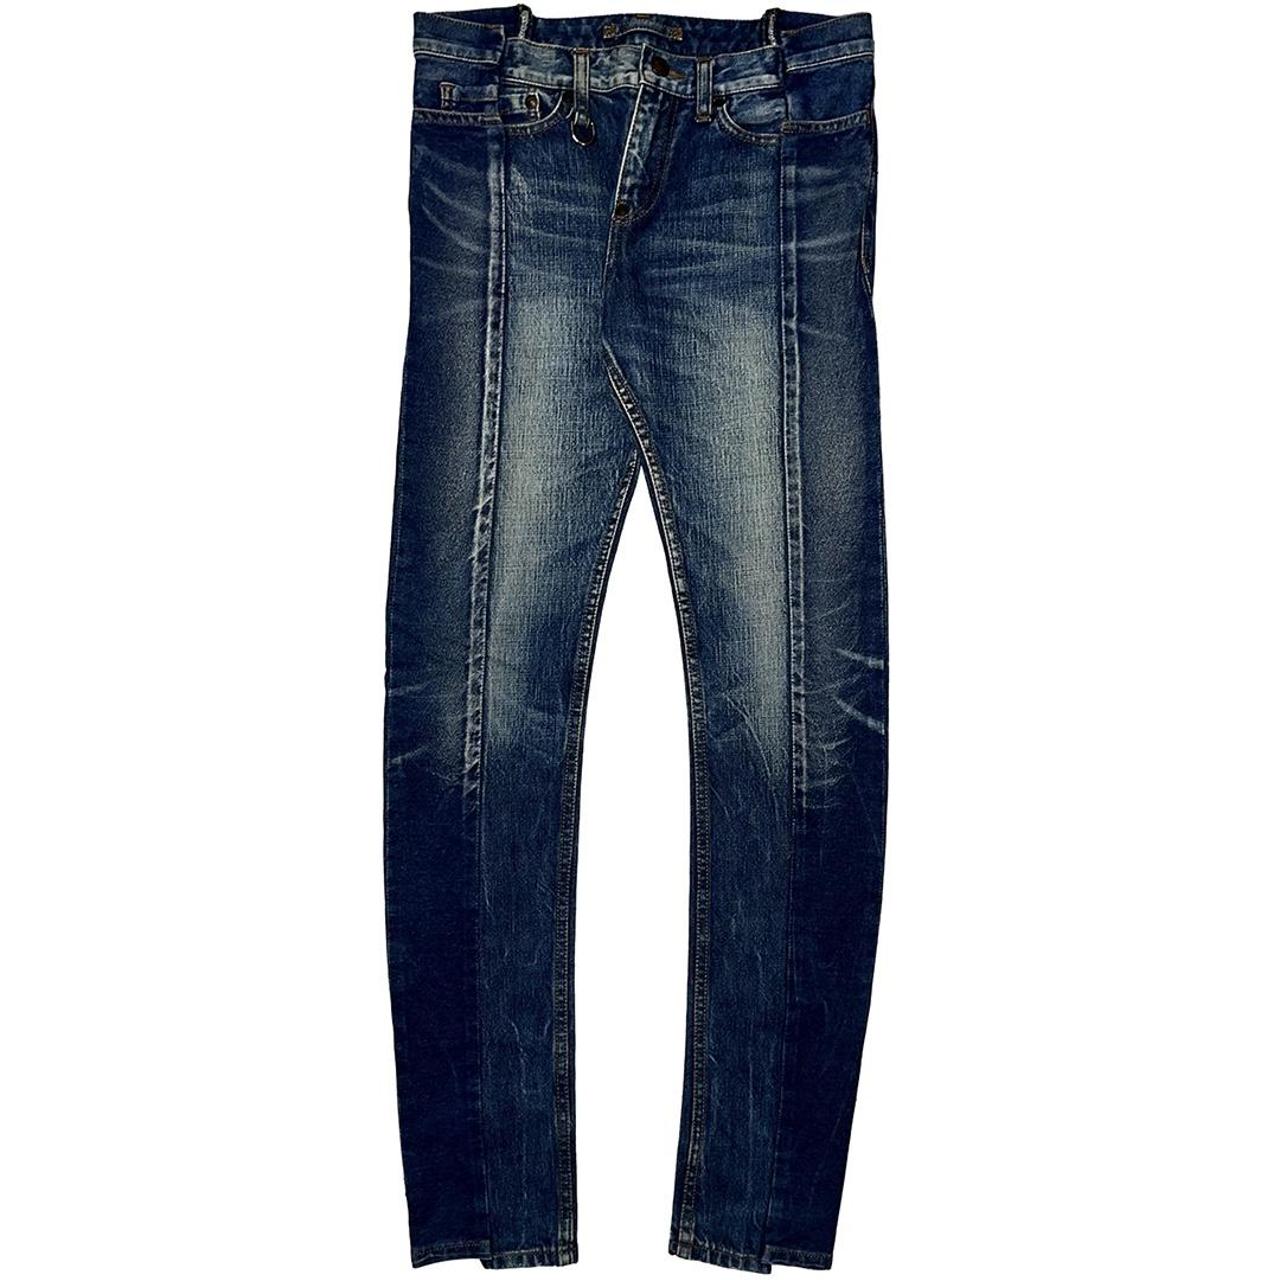 Product Image 1 - Mihara Yasuhiro Split Denim Jeans

Brand:
Mihara